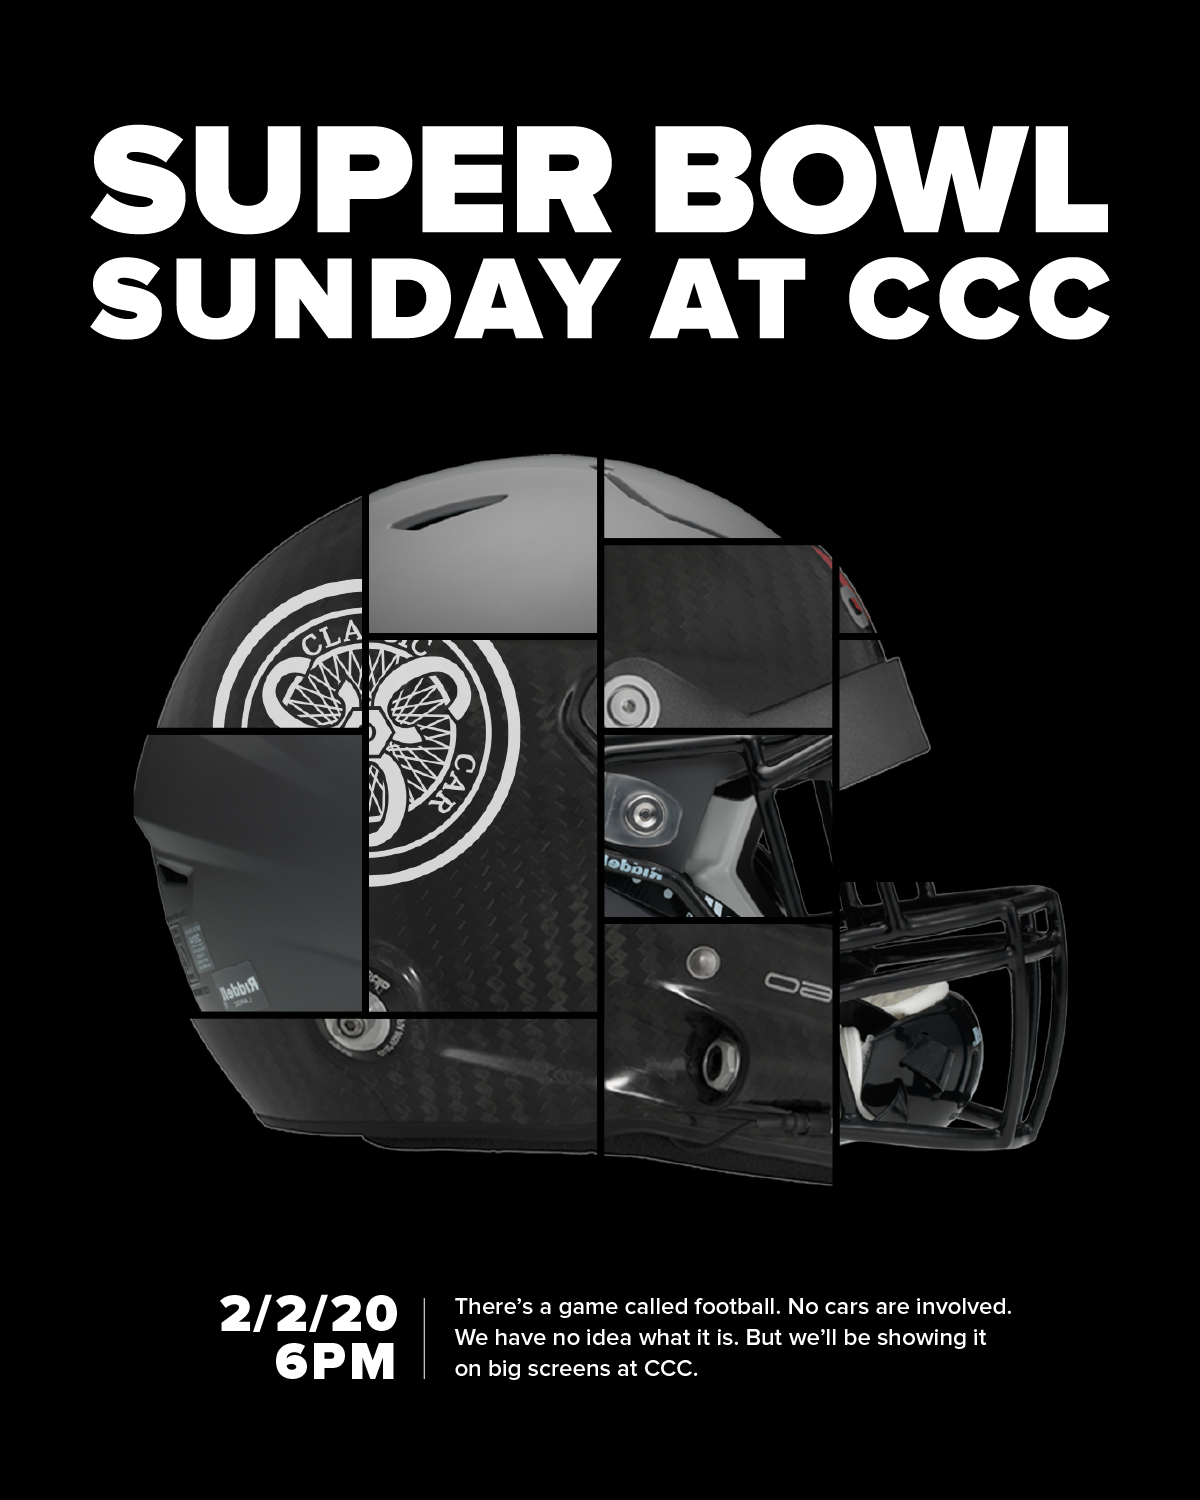 Super Bowl at CCC